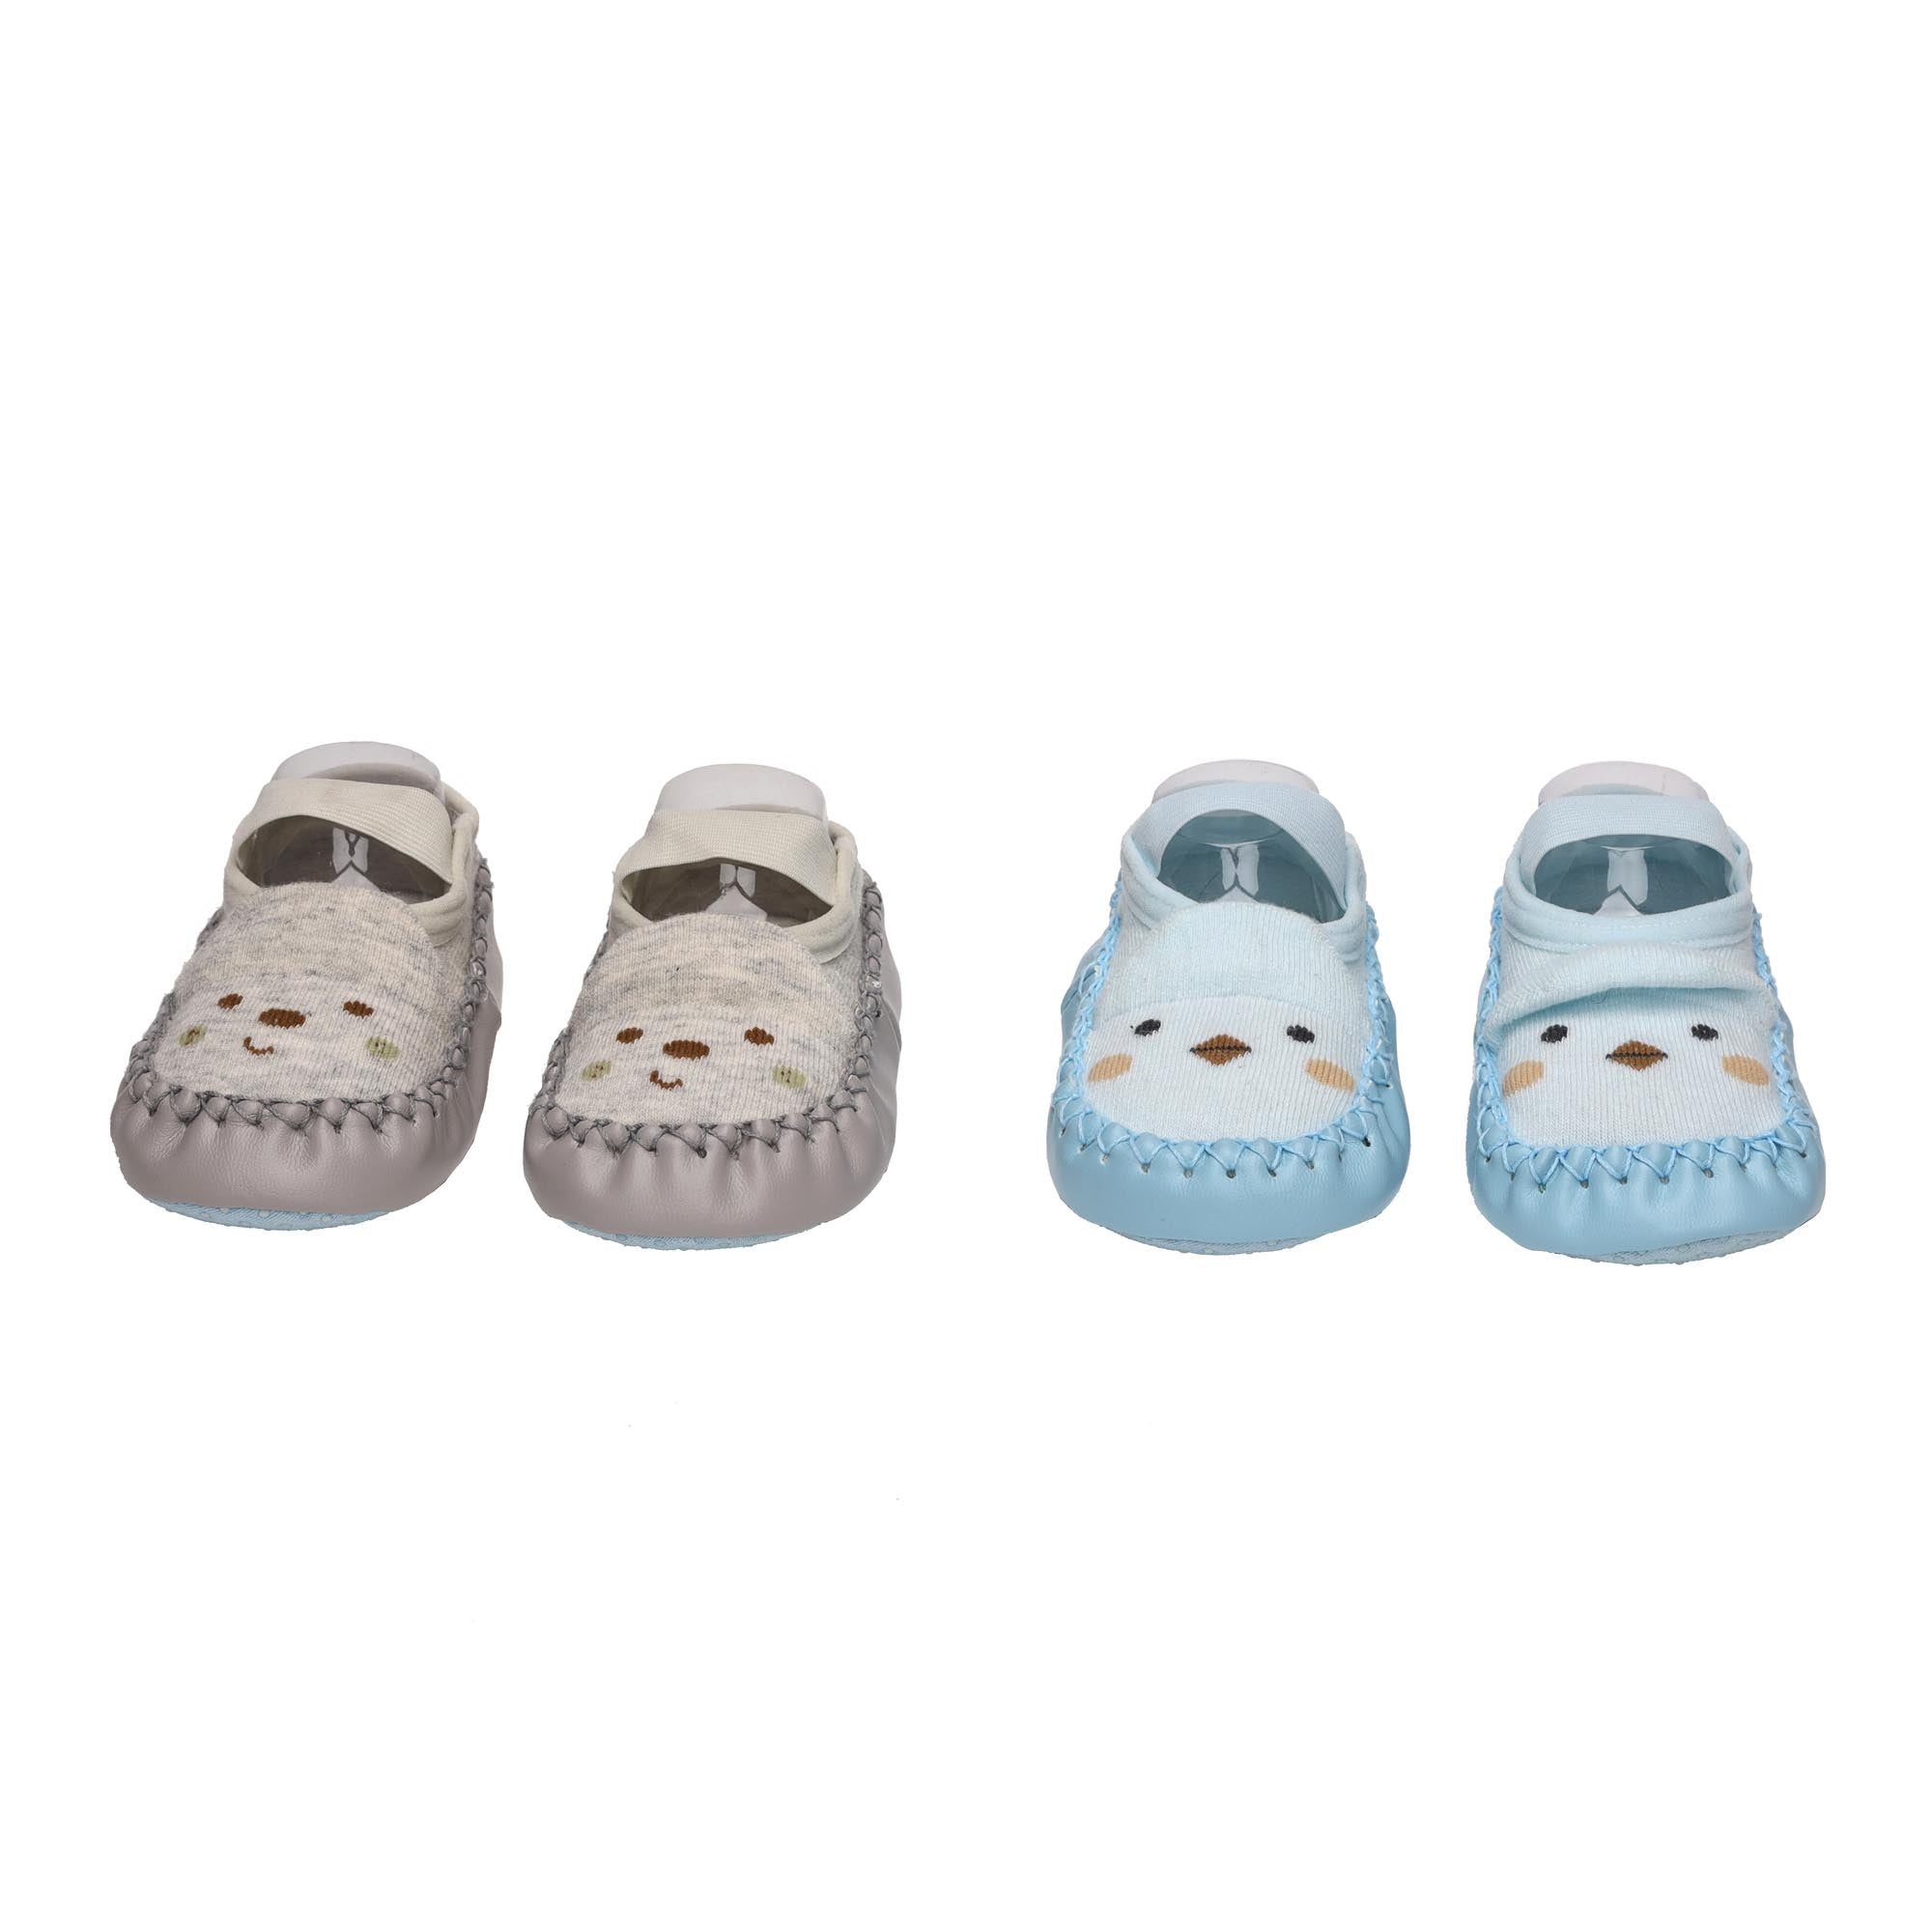 Happy Feet Grey & Blue Slip On Booties - 2 Pack (0-12 Months)